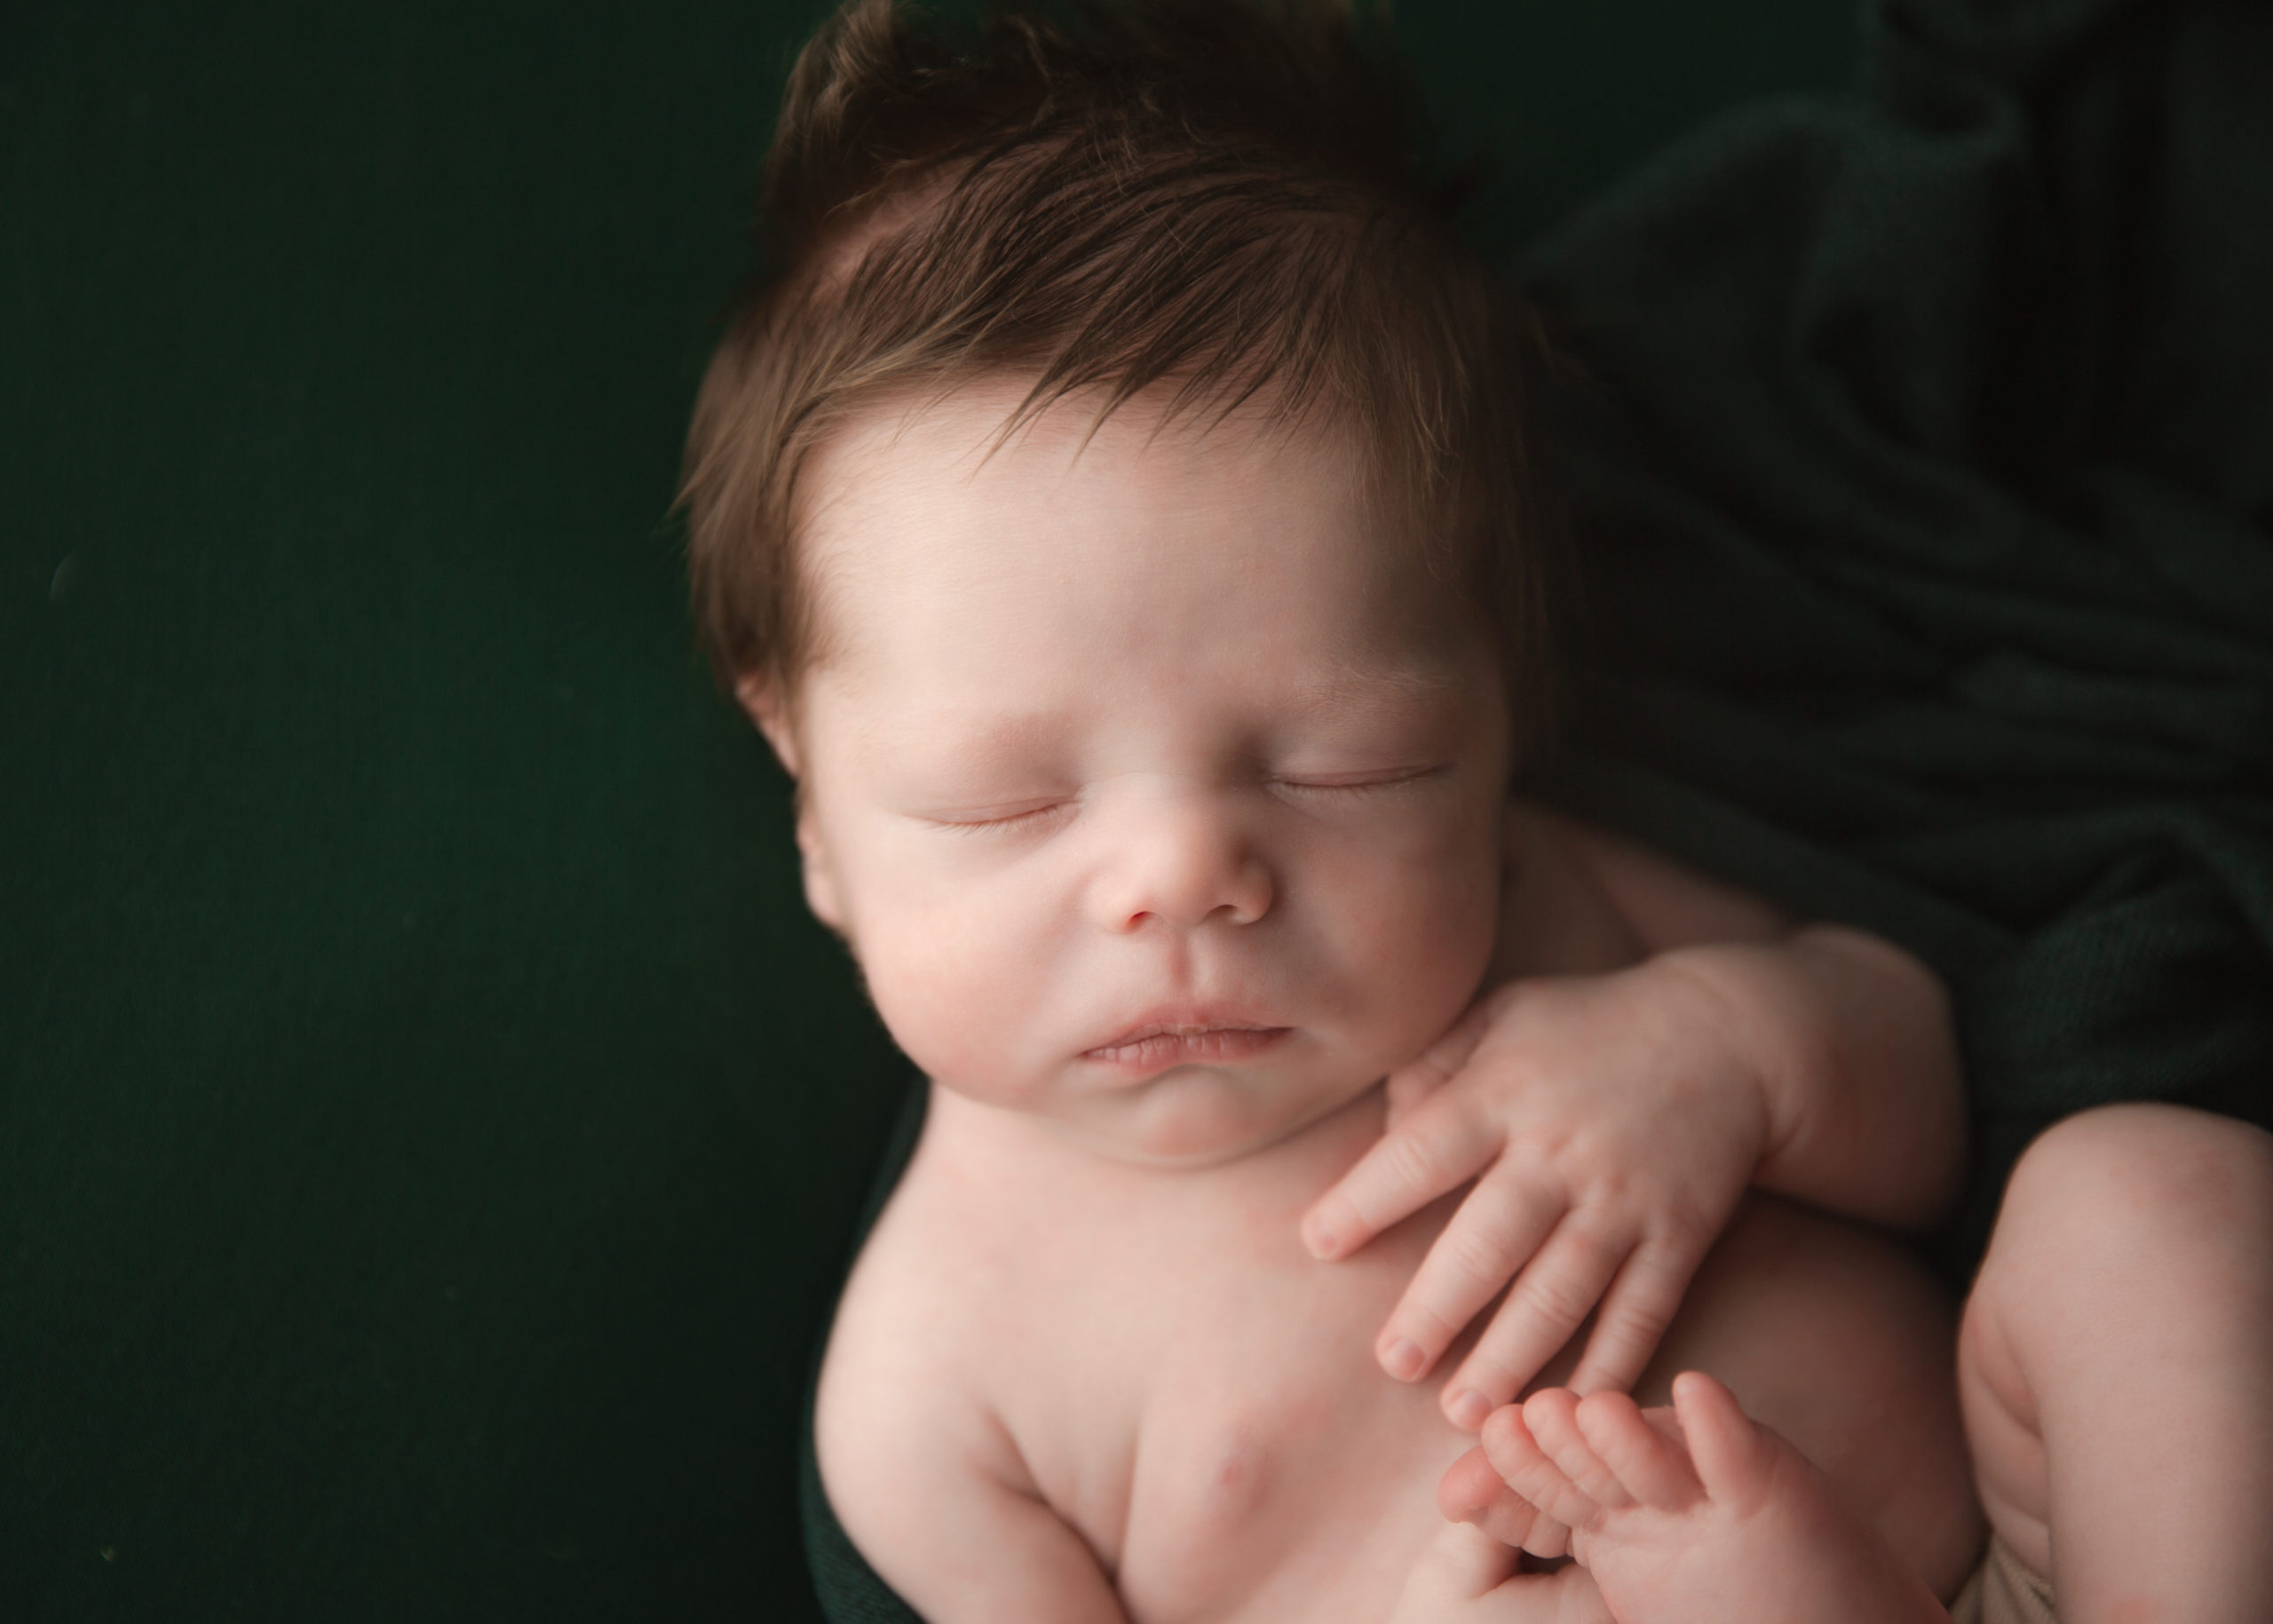 Newborn baby boy on a dark green blanket sleeping